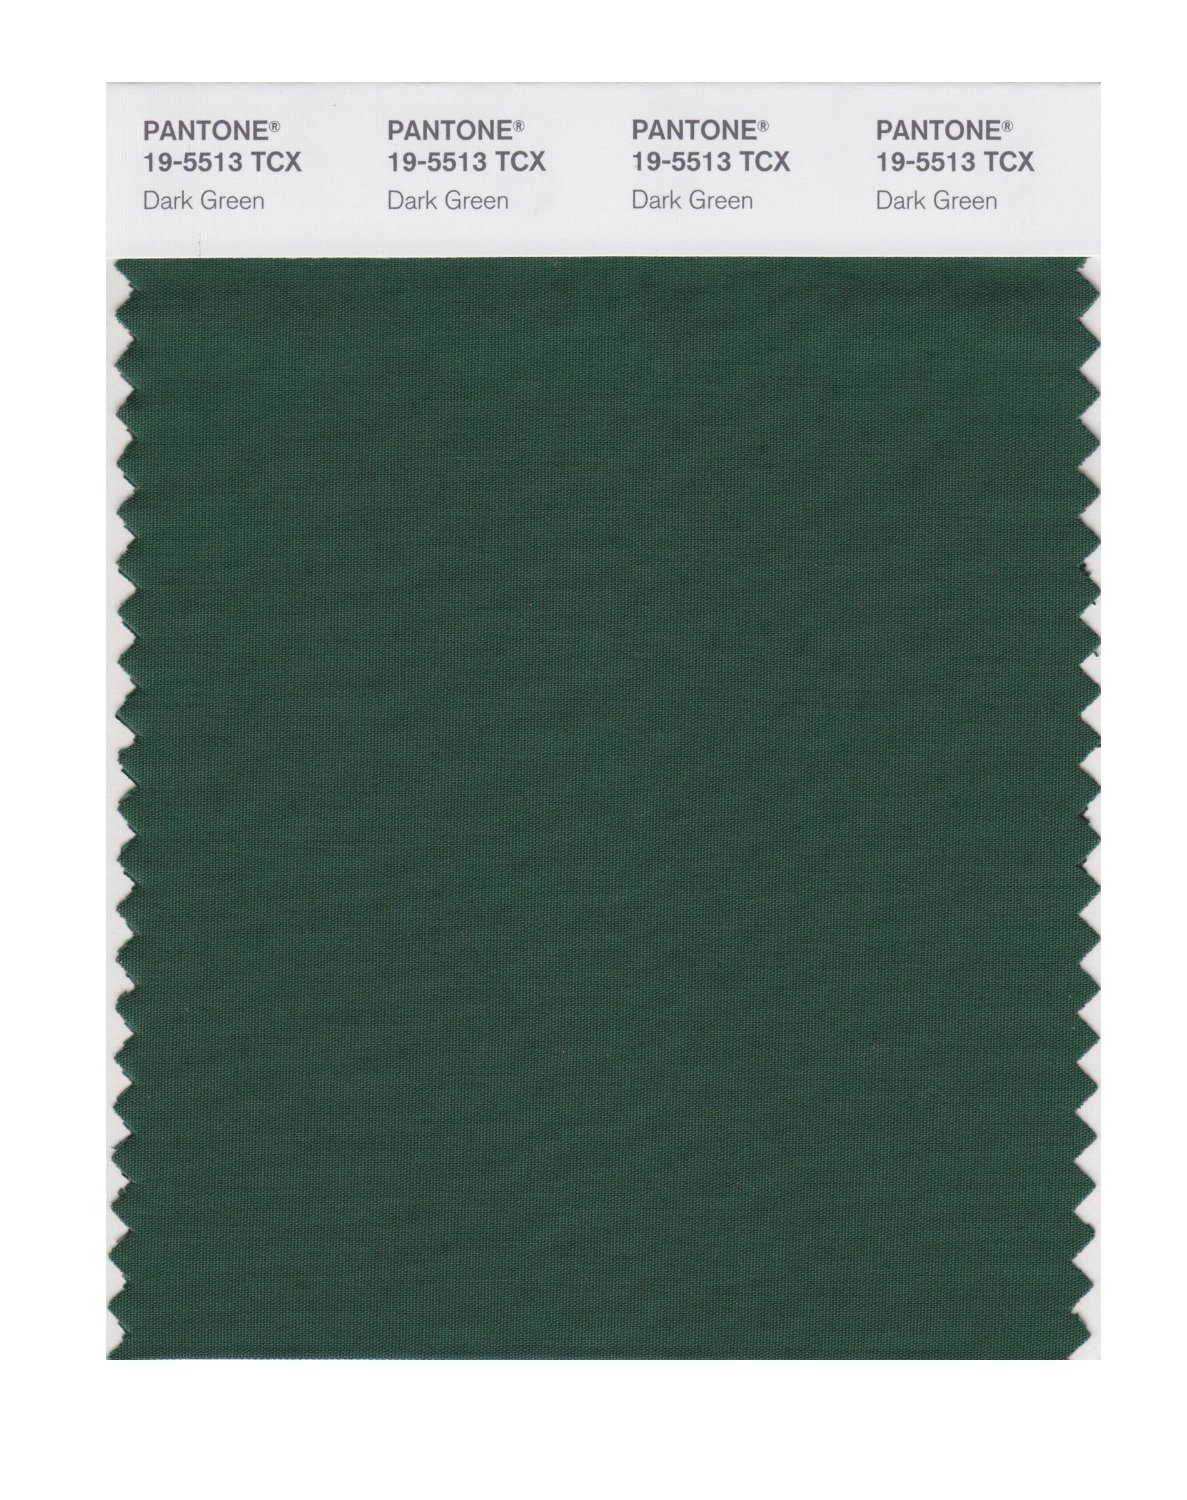 Pantone Cotton Swatch 19-5513 Dark Green